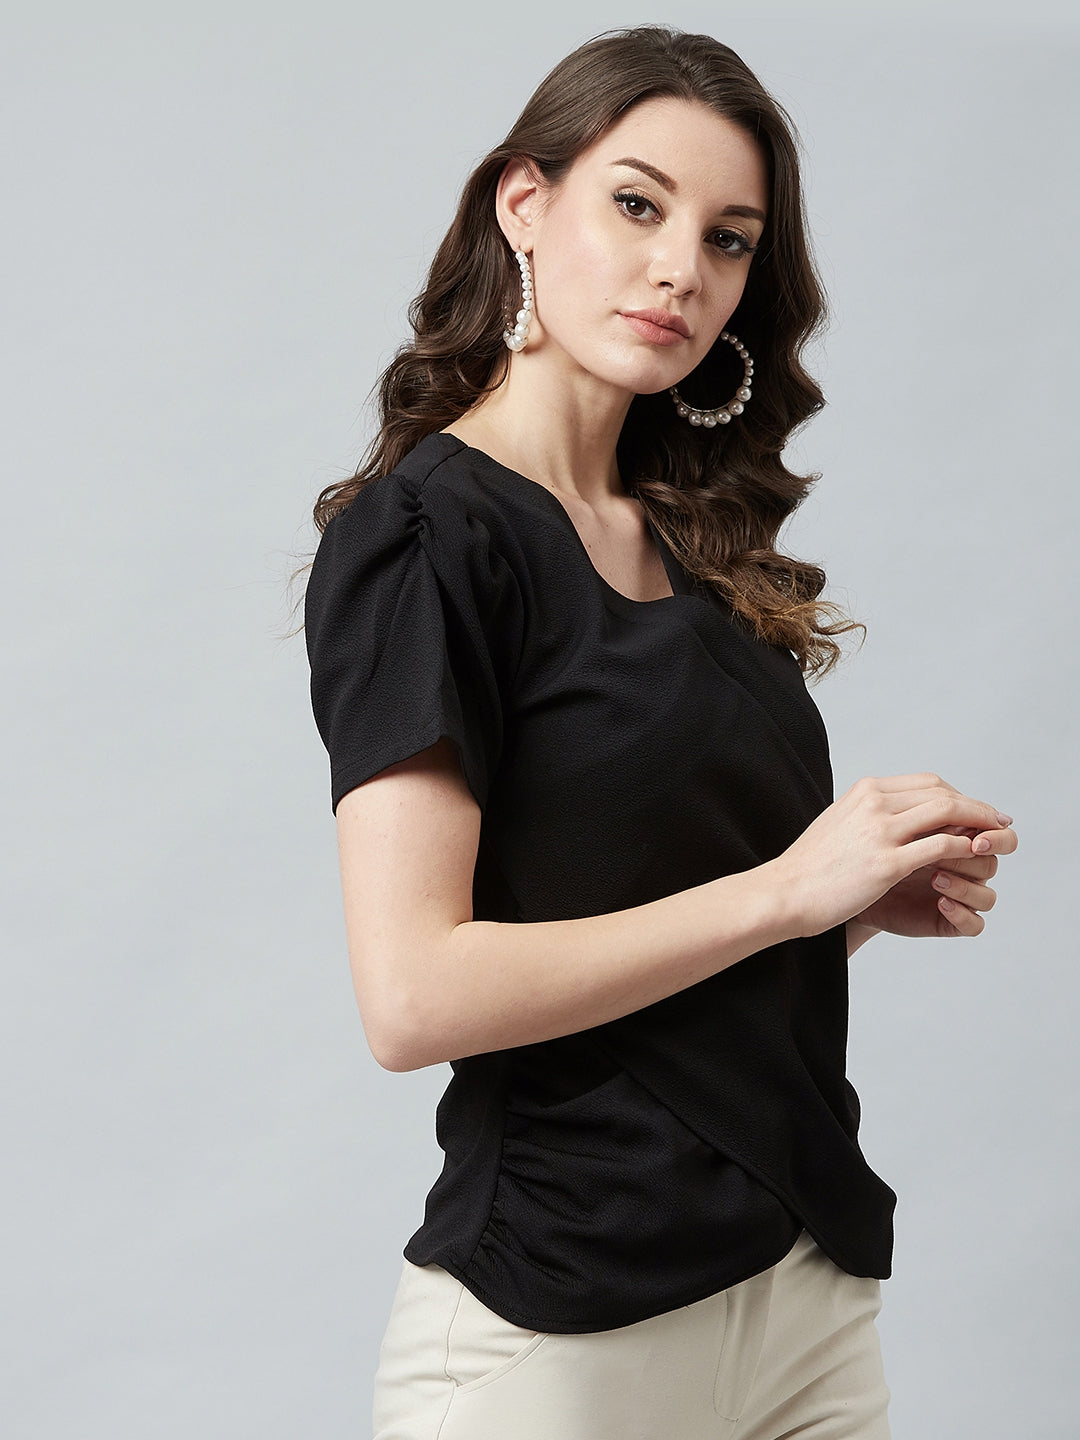 Athena Black Wrap Top With Puffed Sleeves - Athena Lifestyle